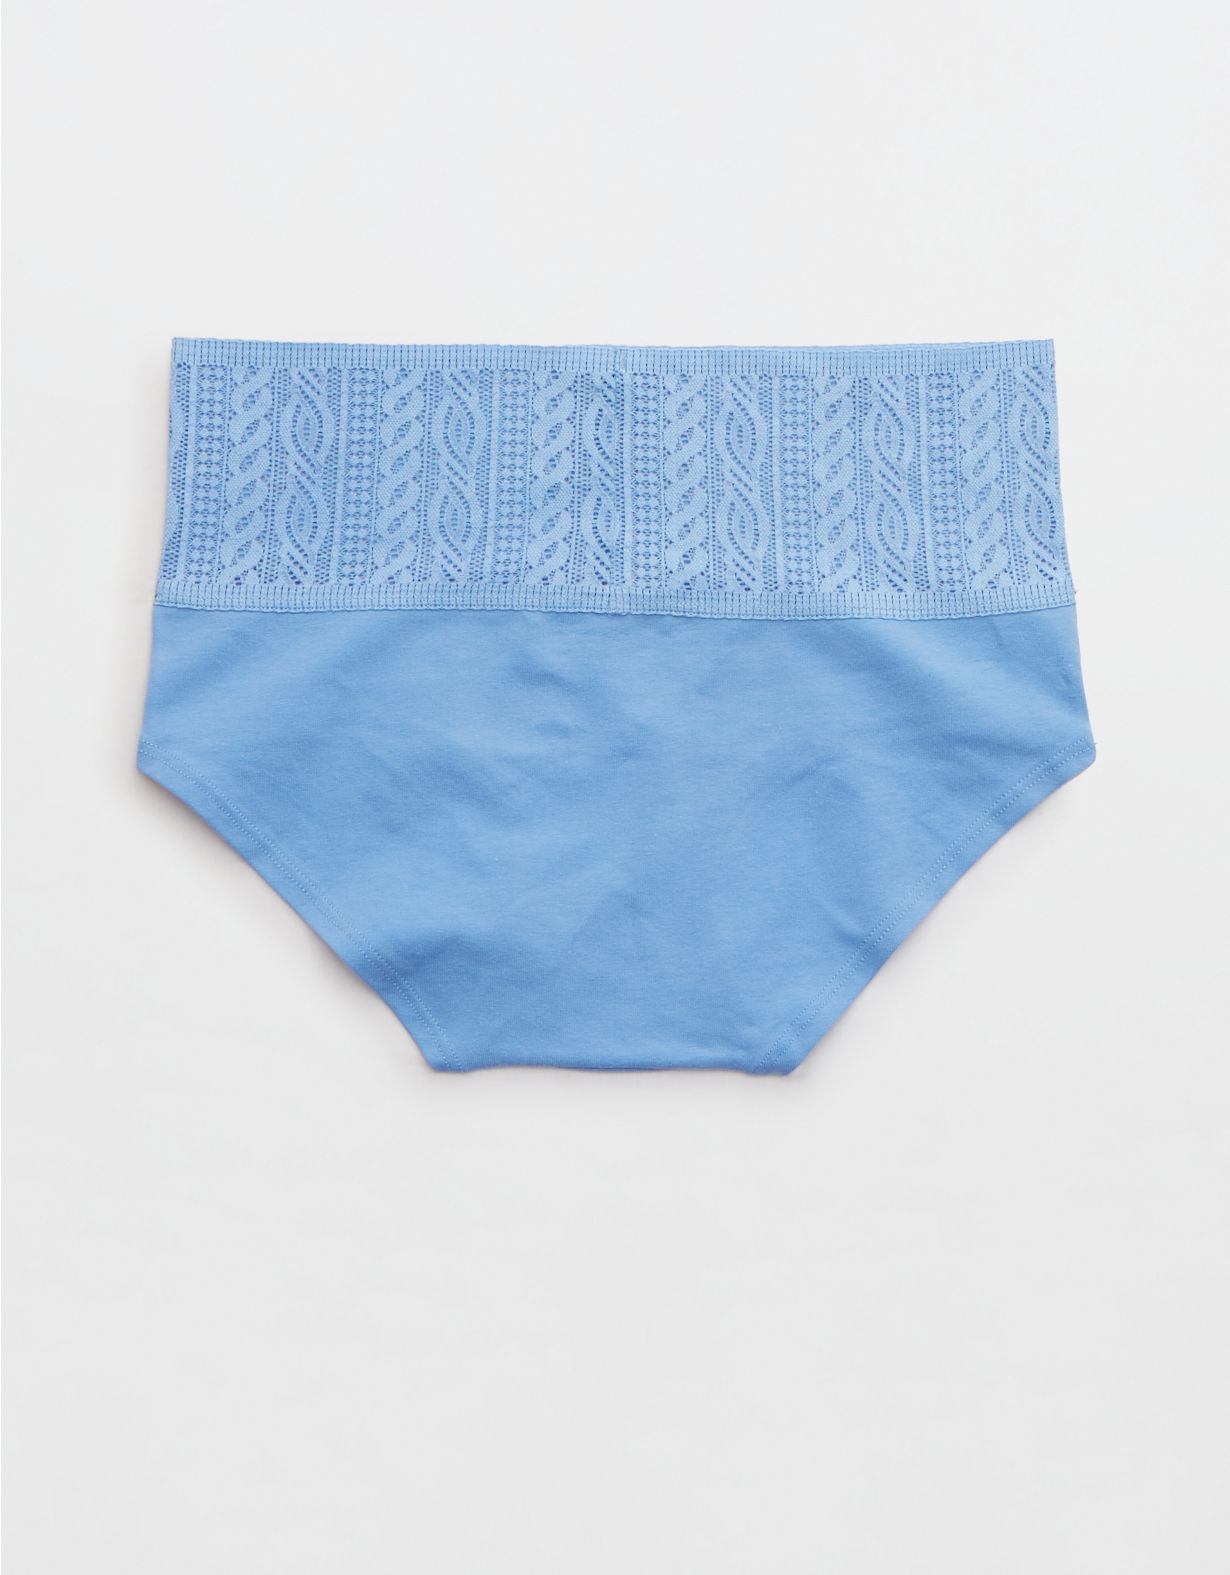 Aerie Cotton Cable Lace Boybrief Underwear